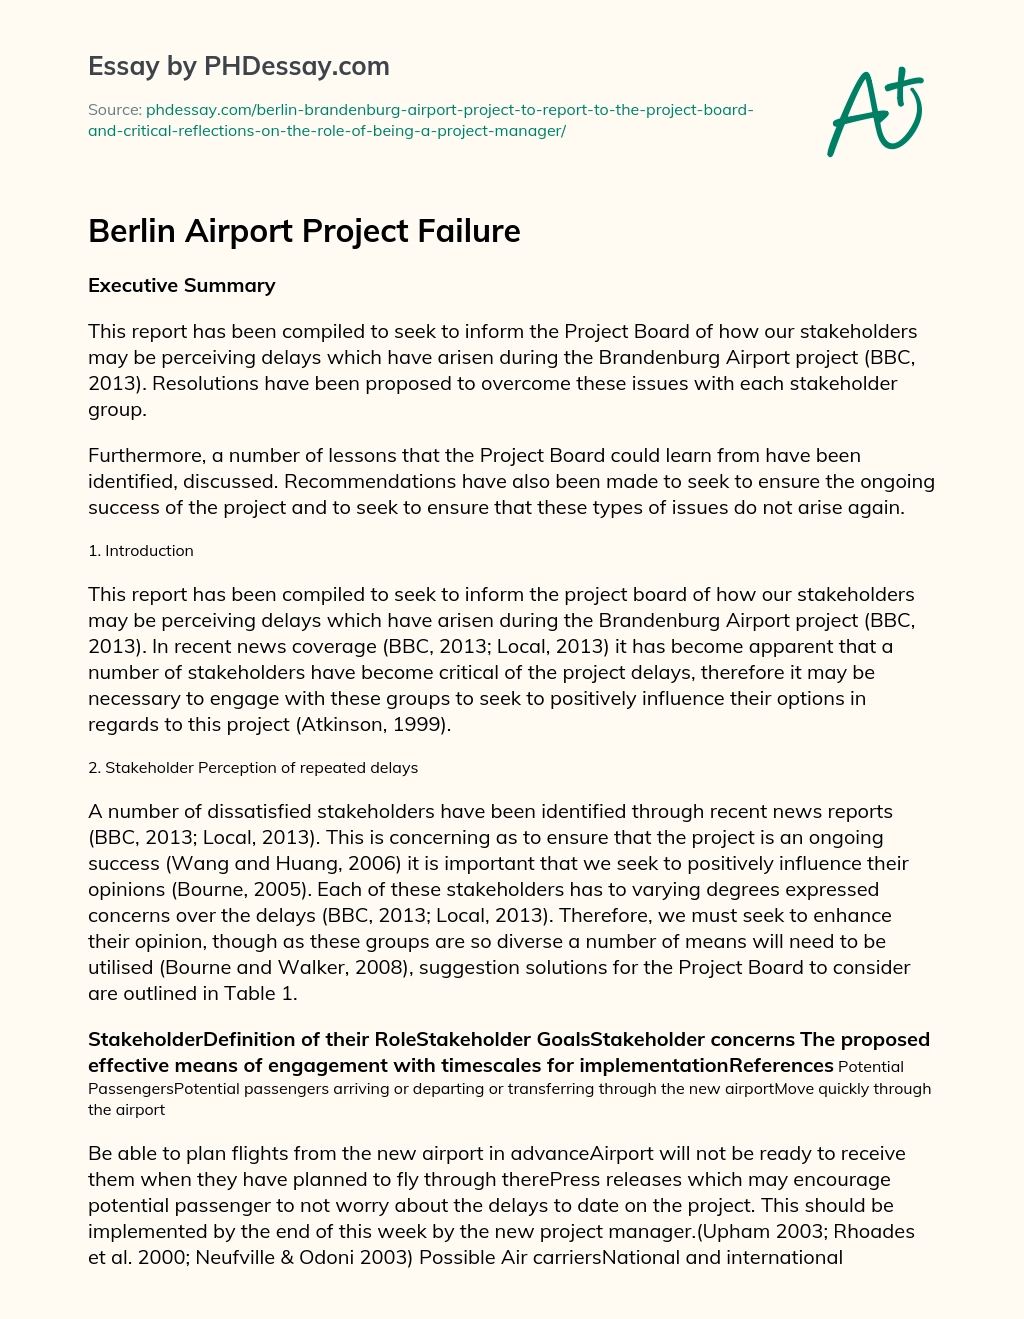 Berlin airport project failure essay